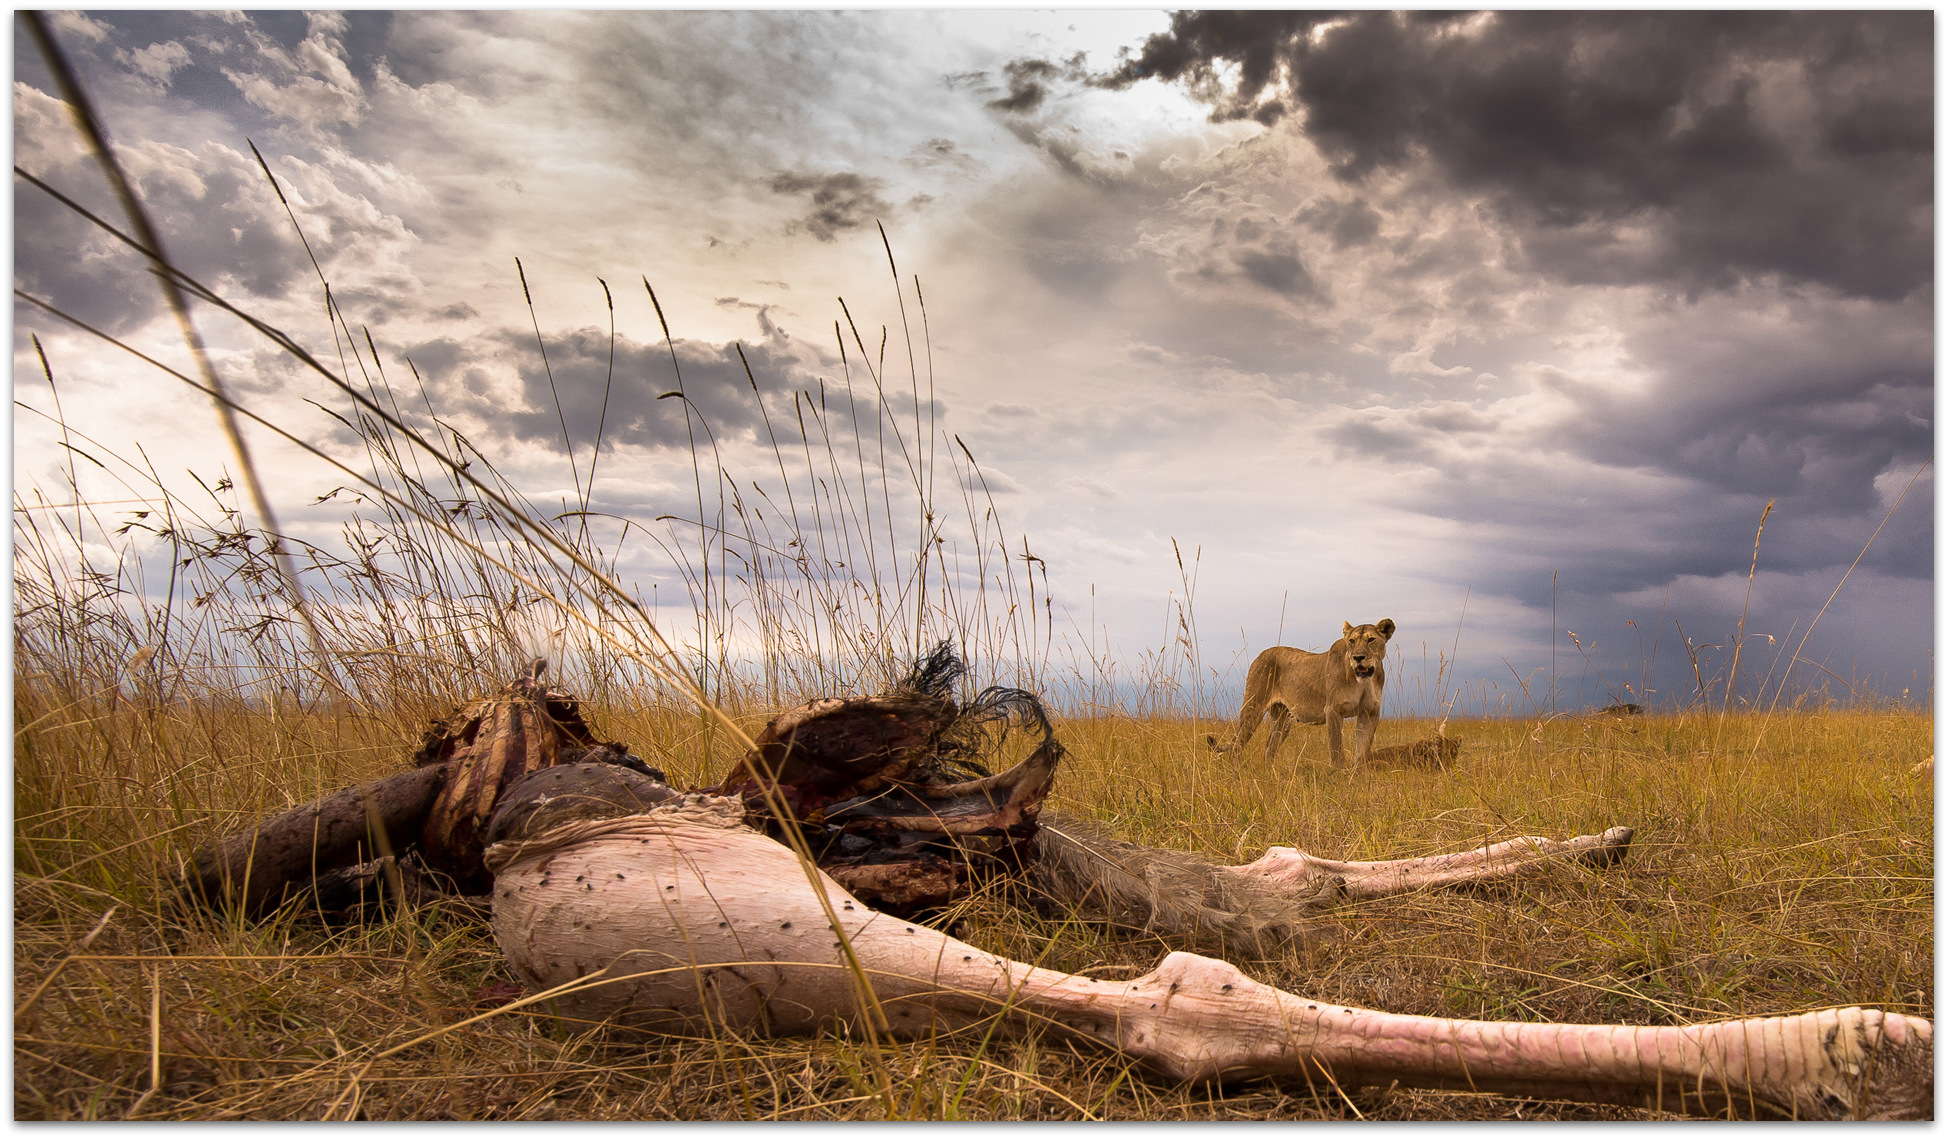 Ostrich carcass with lion in the Maasai Mara